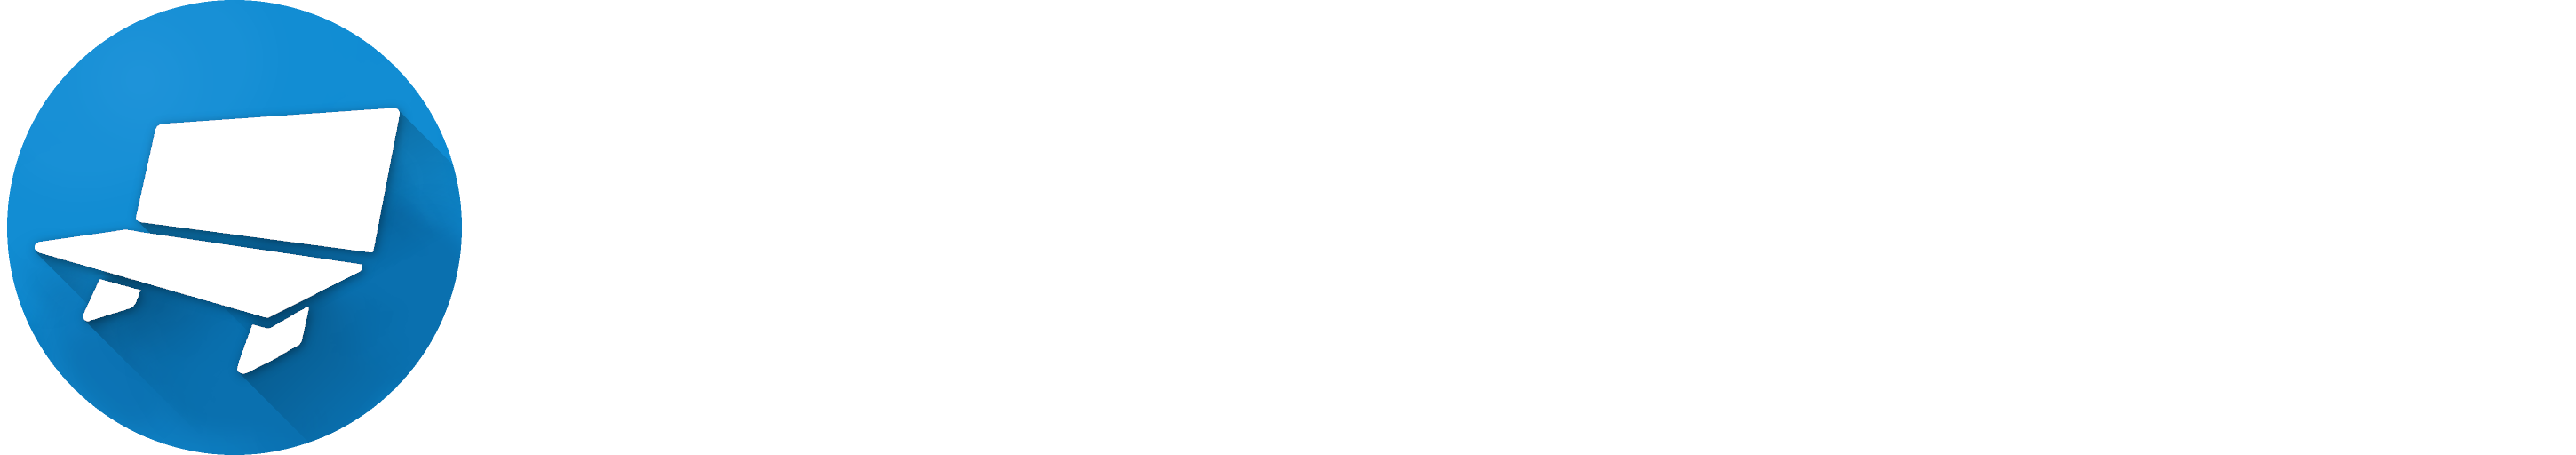 blockbench_logo_text.png